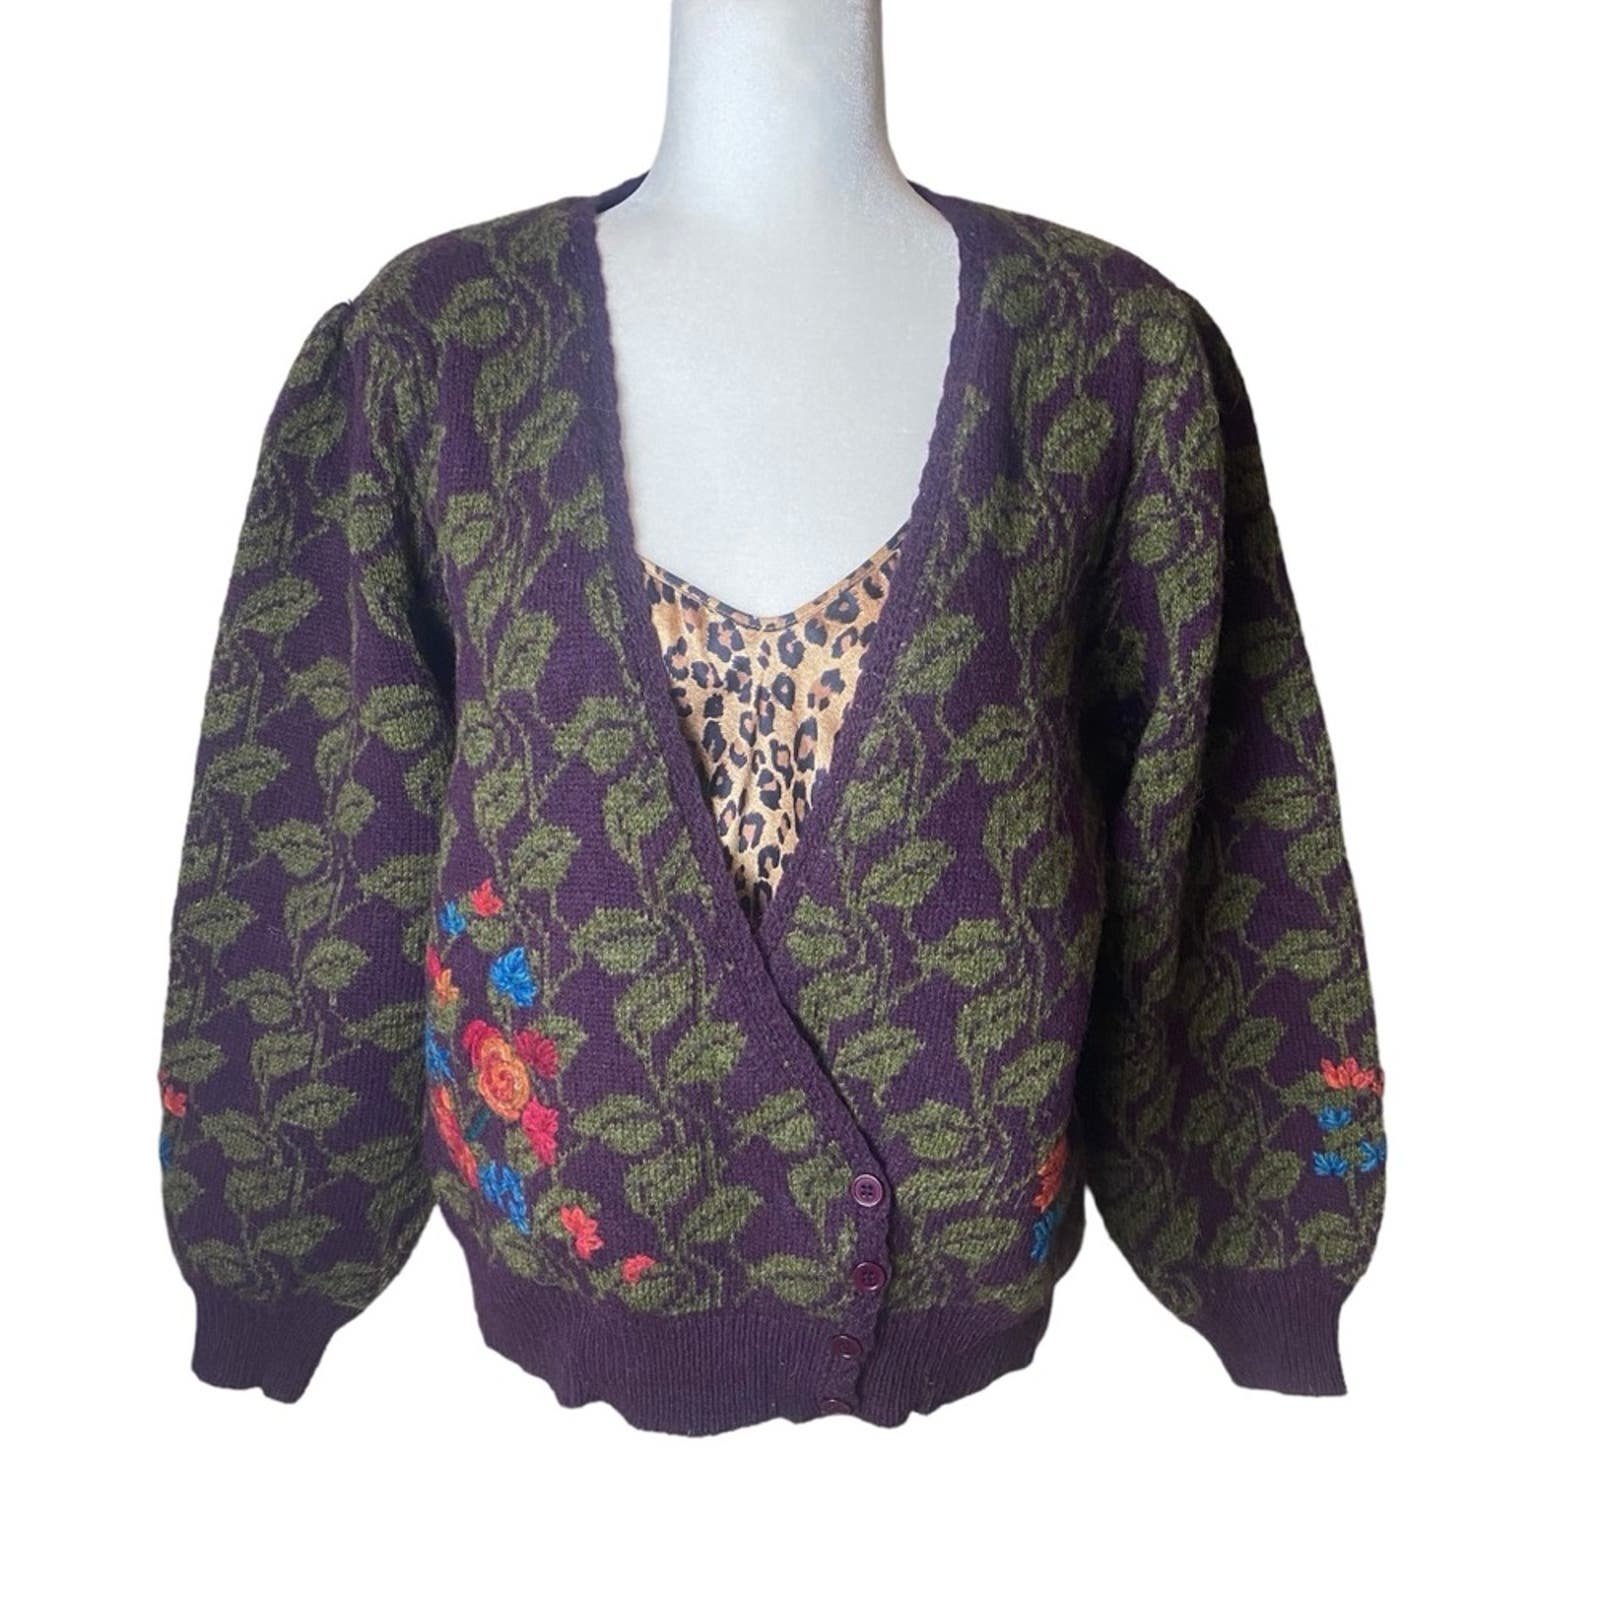 Popular Vintage Components hand embroidered wool floral cardigan sweater size large kfJASrrta Online Shop